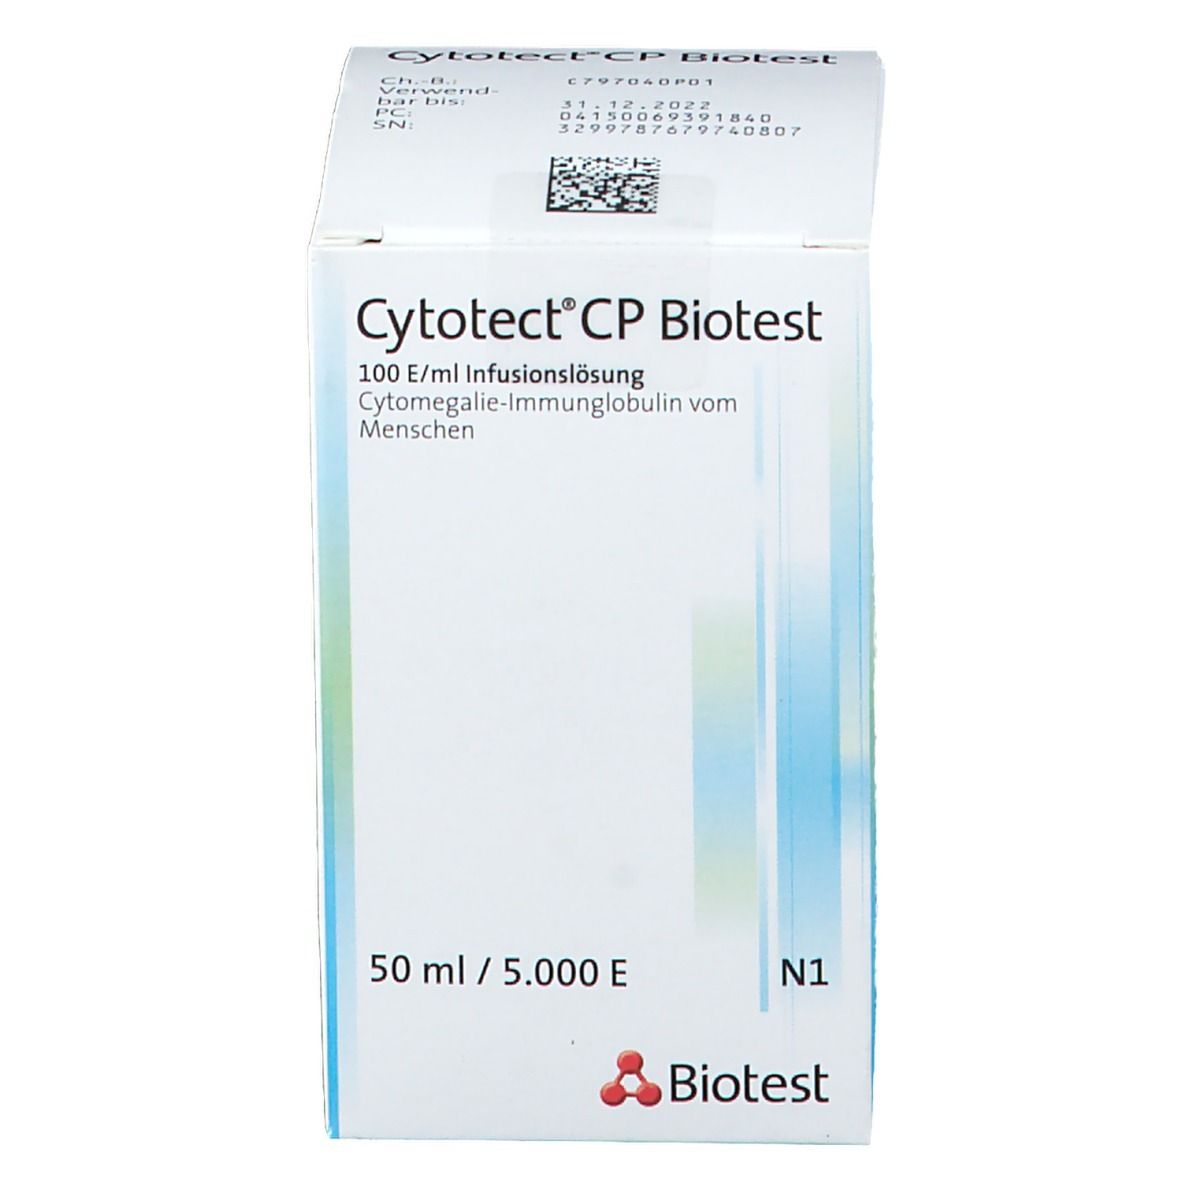 Cytotect® CP Biotest 100 E/ml